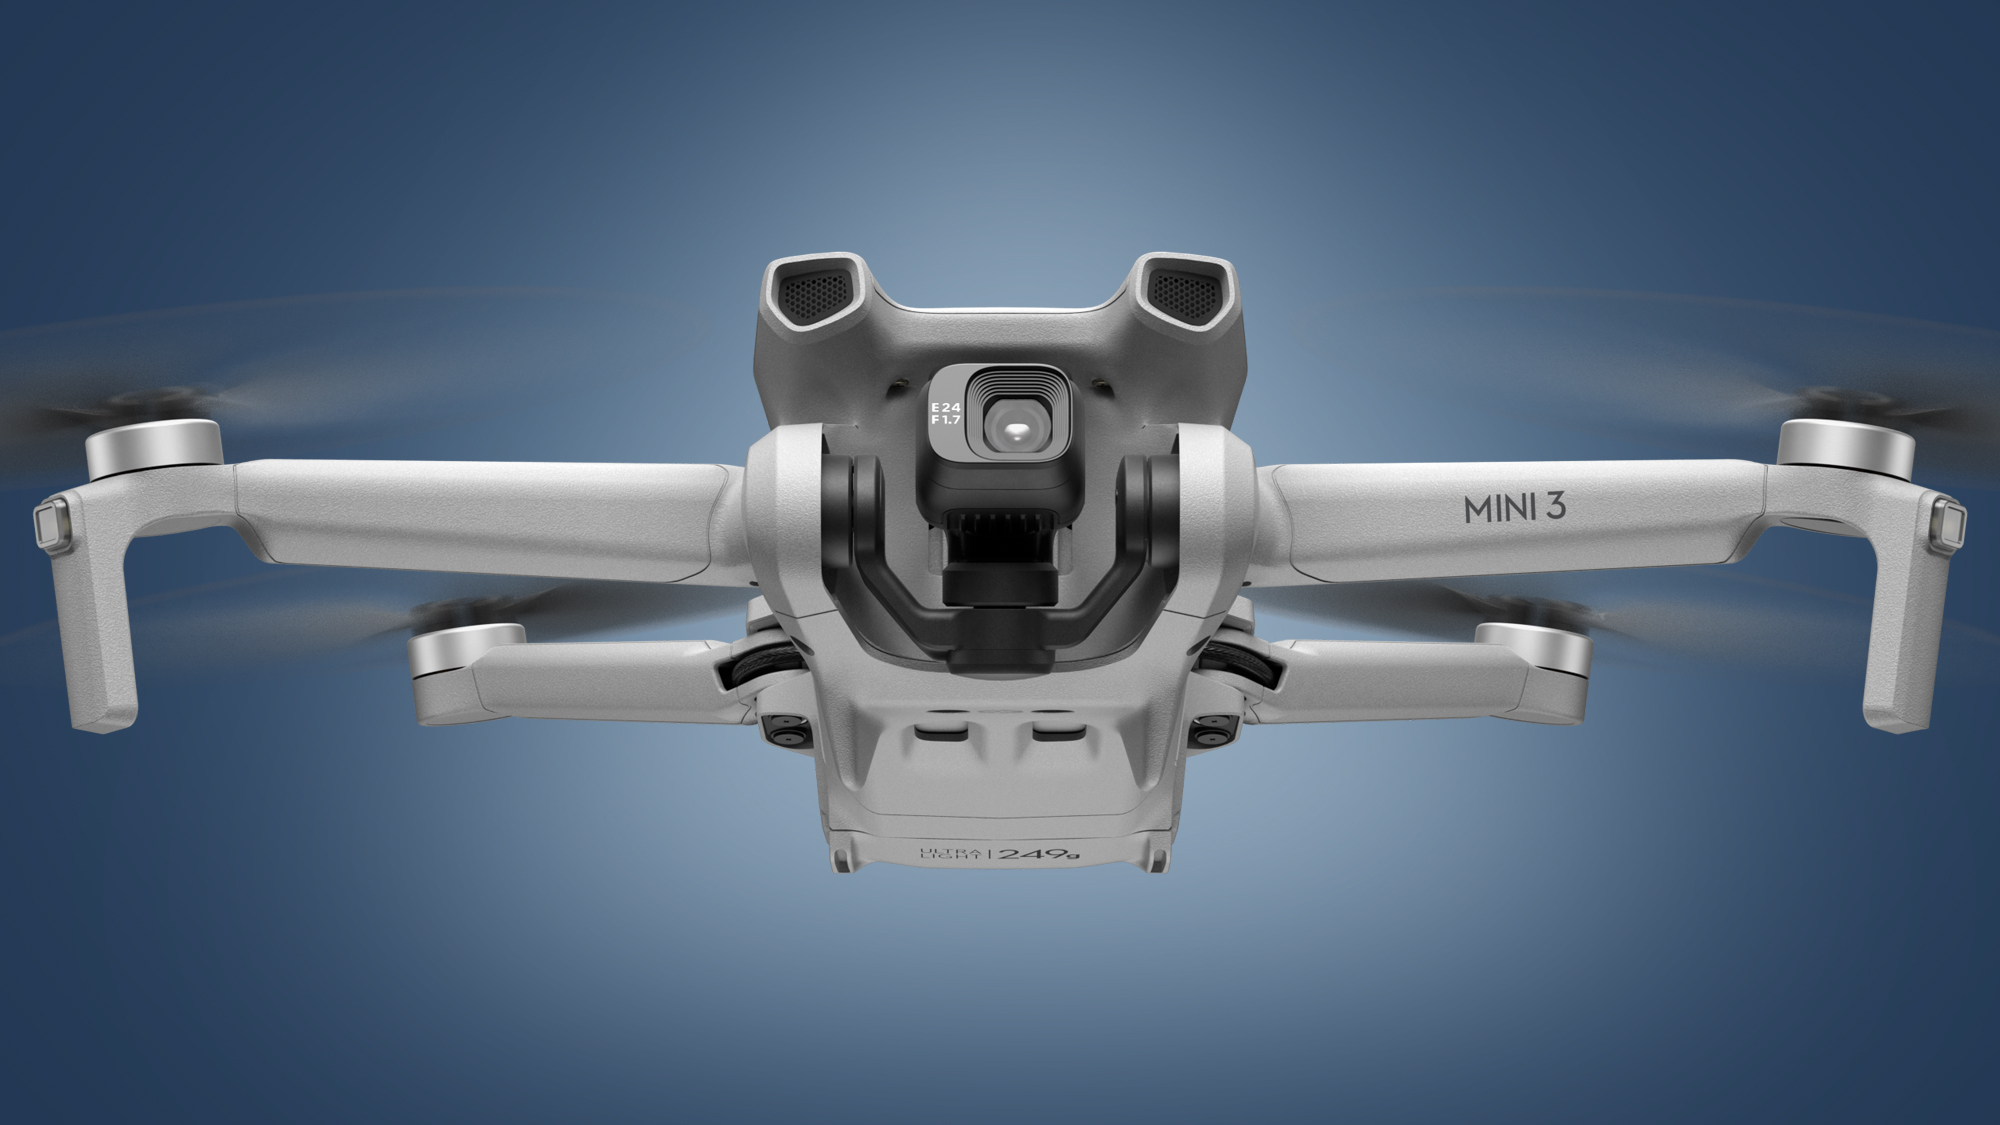 DJI Mini 3 drone on a blue background